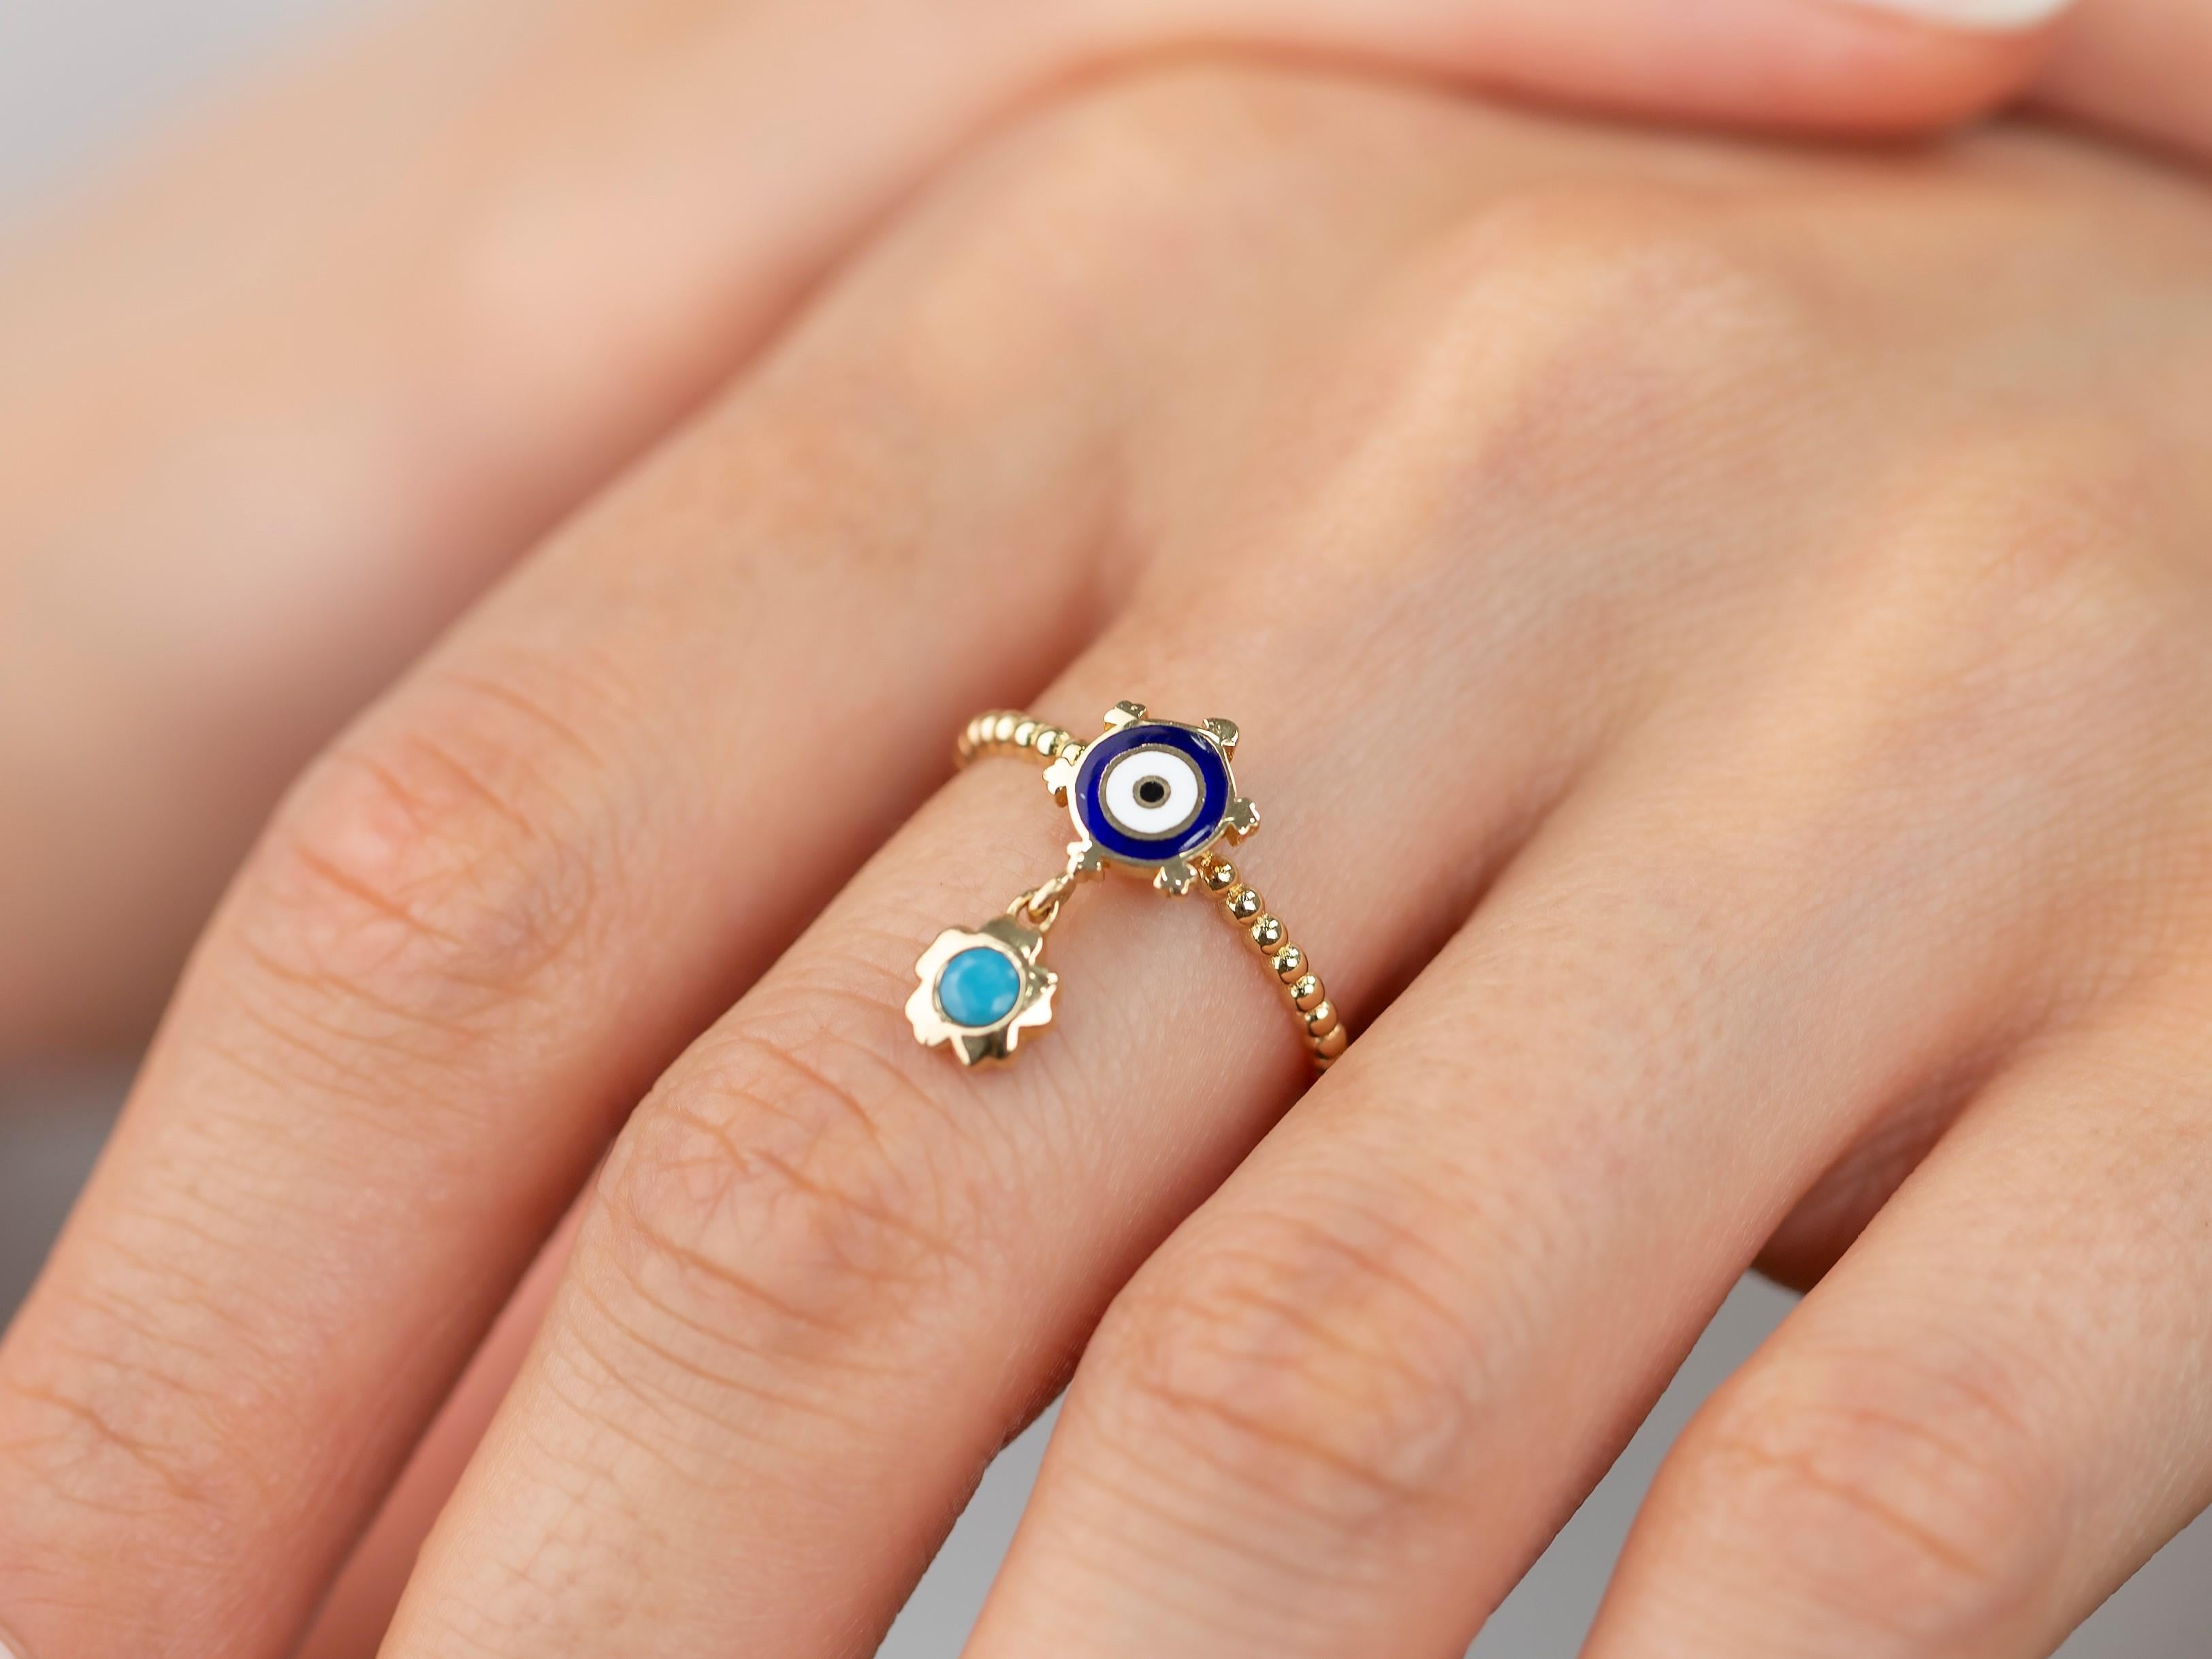 14K Gold Dainty Eye Enameled Rudder Ring with Turquoise Pendant 2